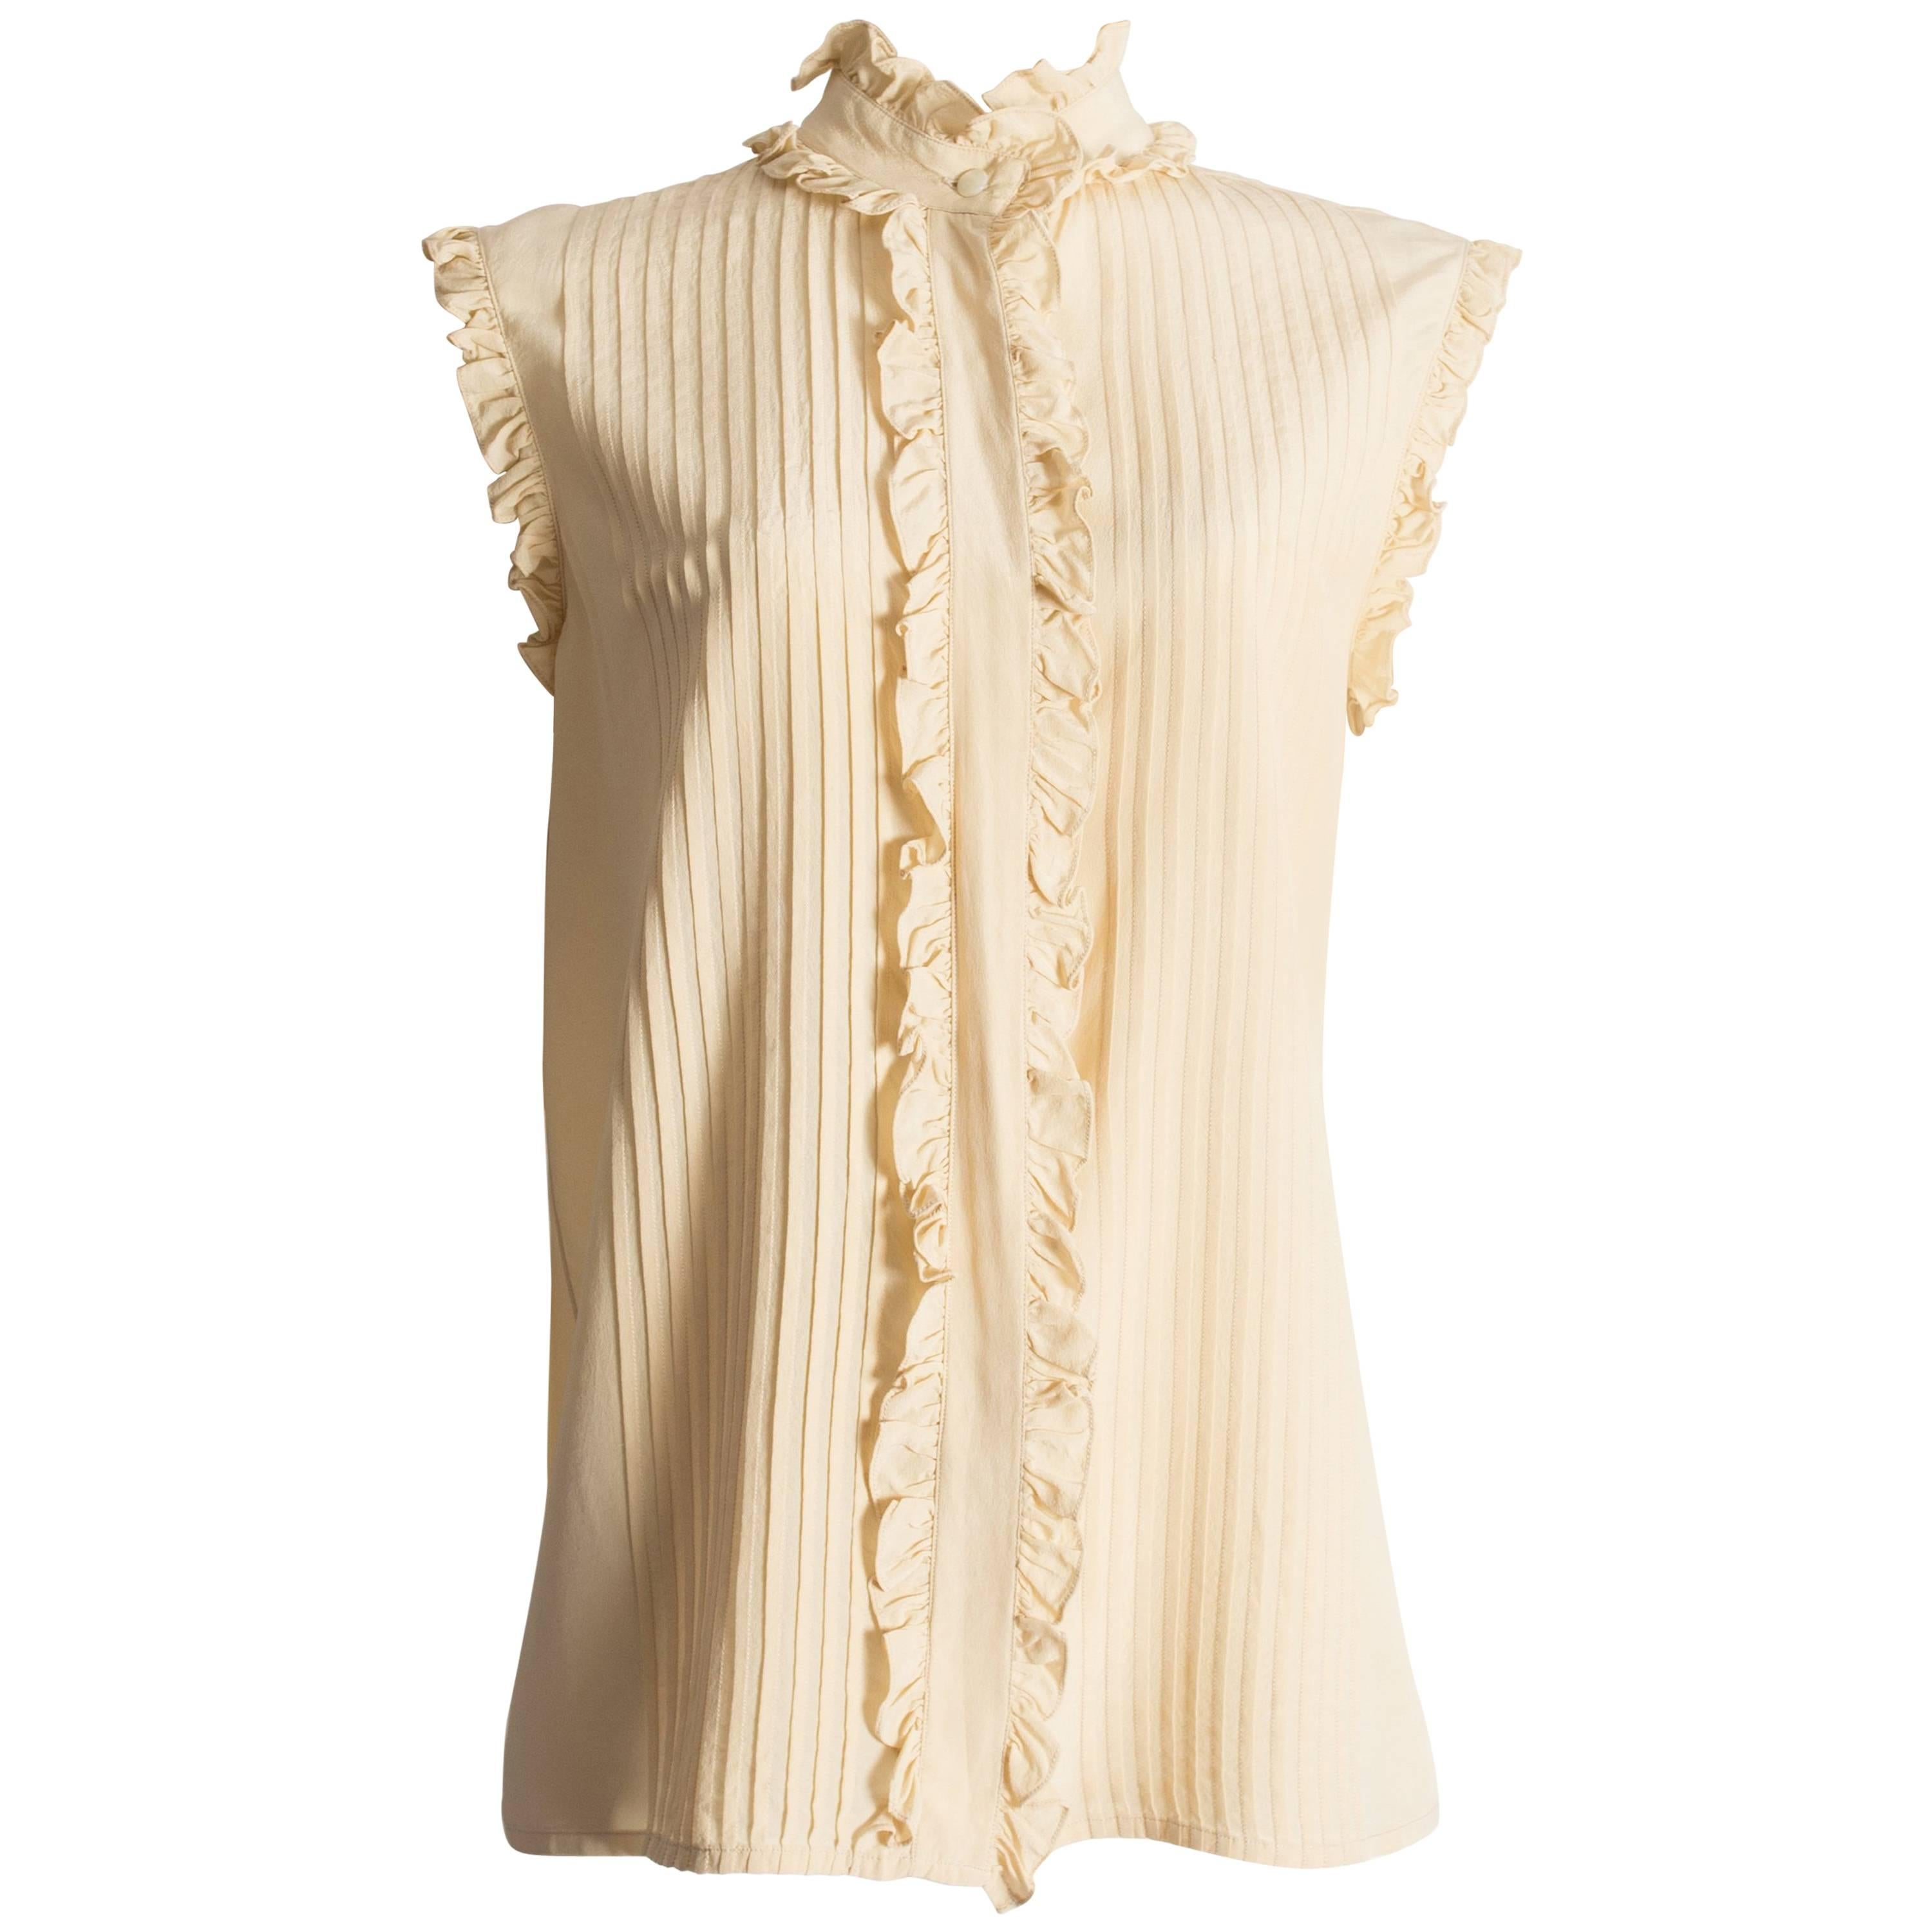 Chanel ivory silk pintuck blouse, circa 1970